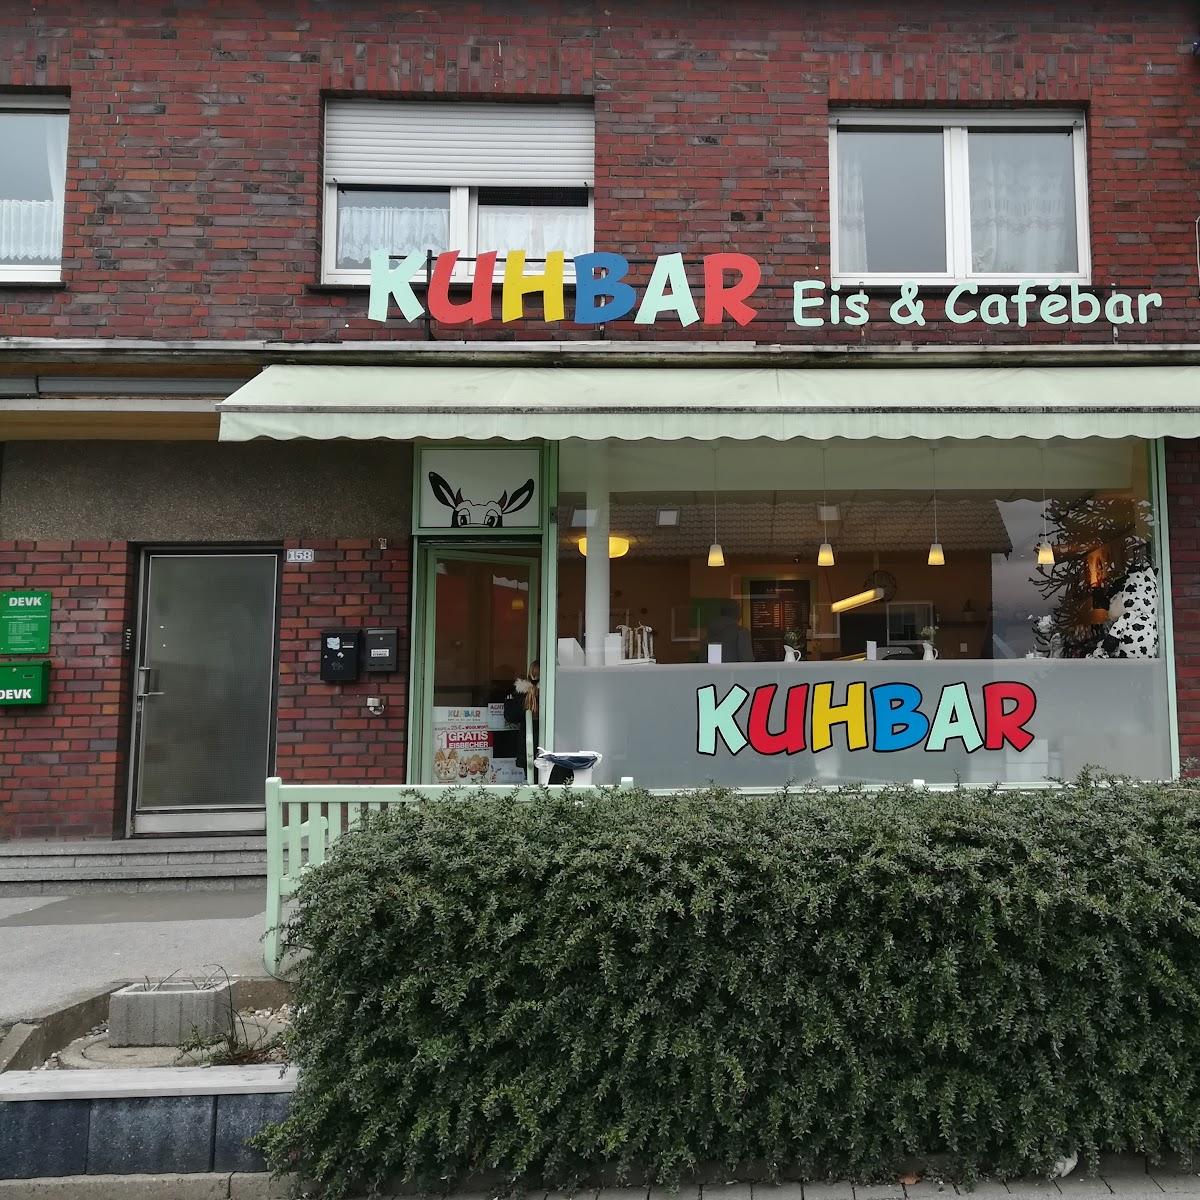 Restaurant "KUHBAR -Eving" in Dortmund